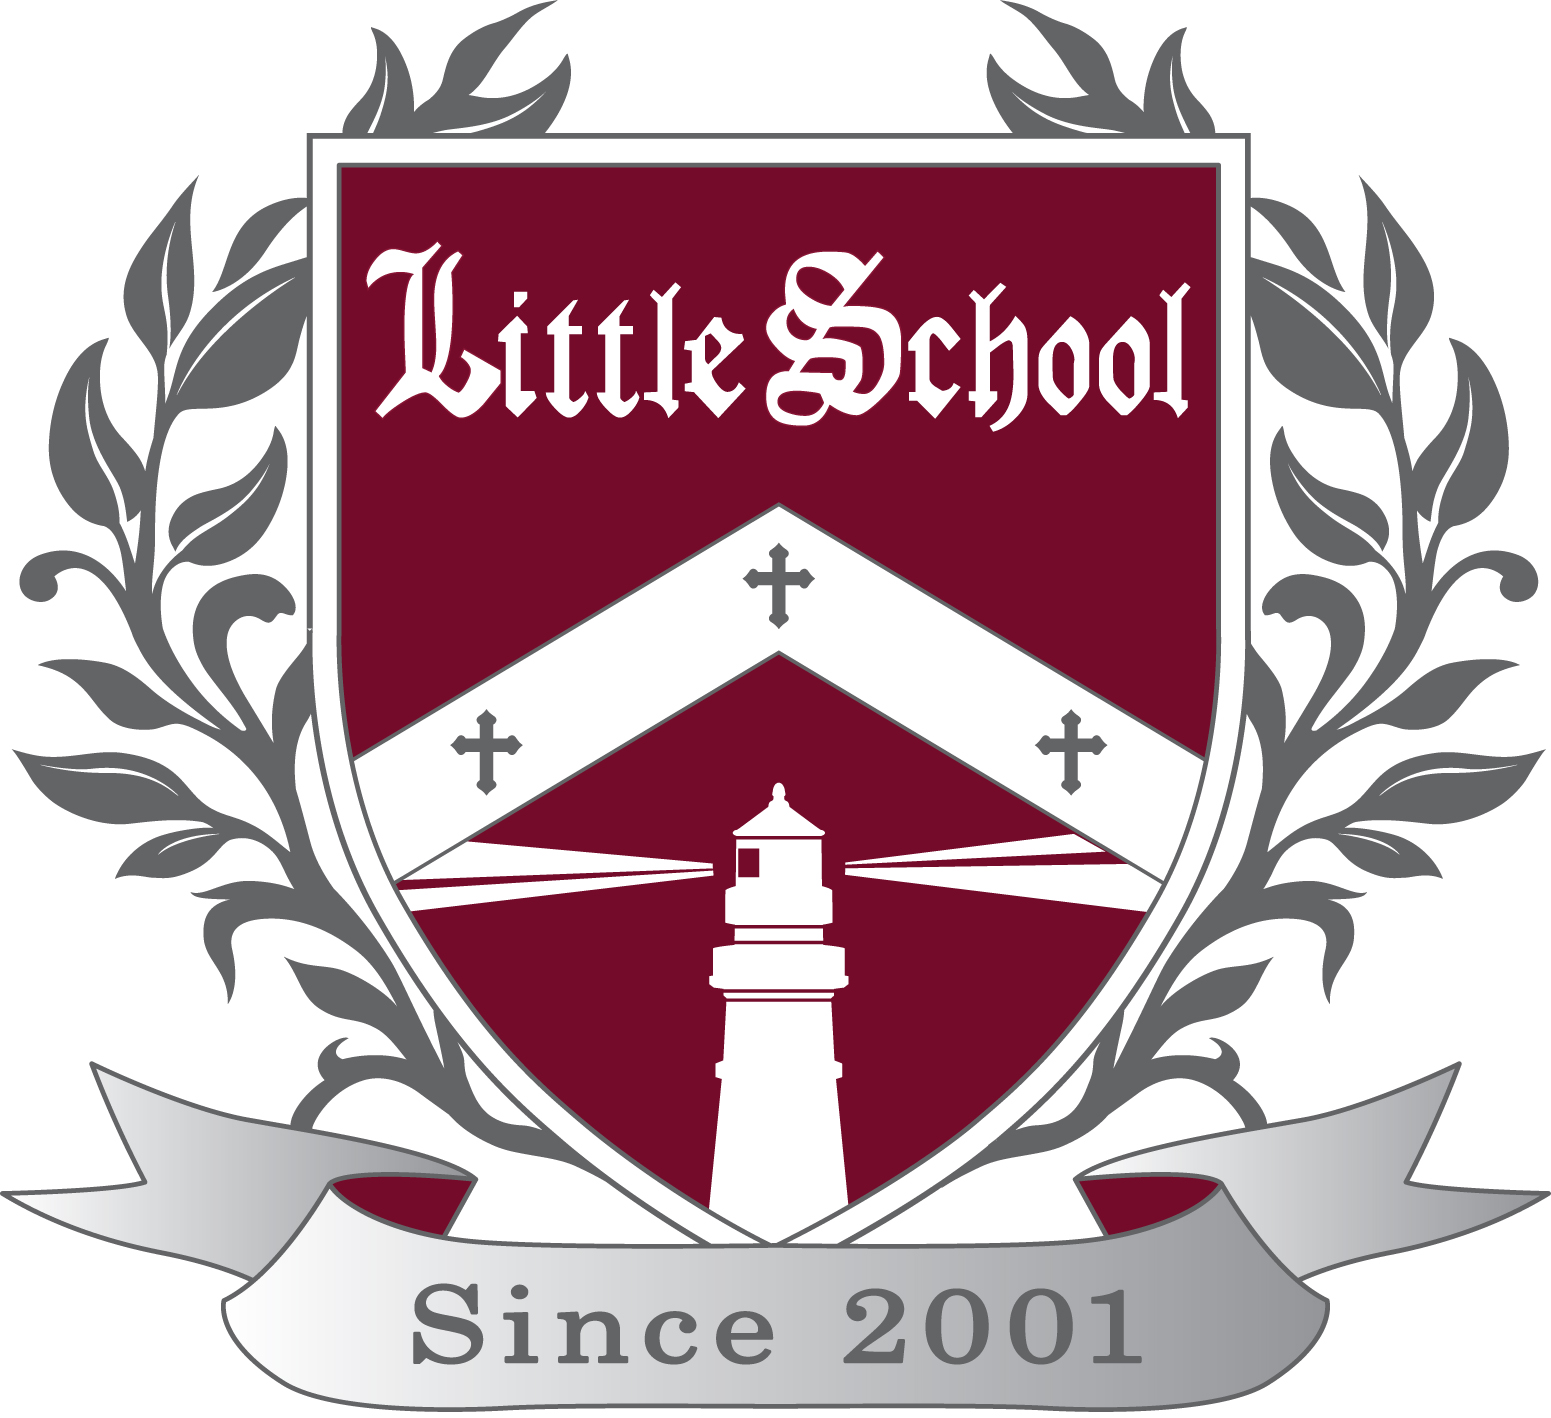 LittleSchool ( 날리지에이드)